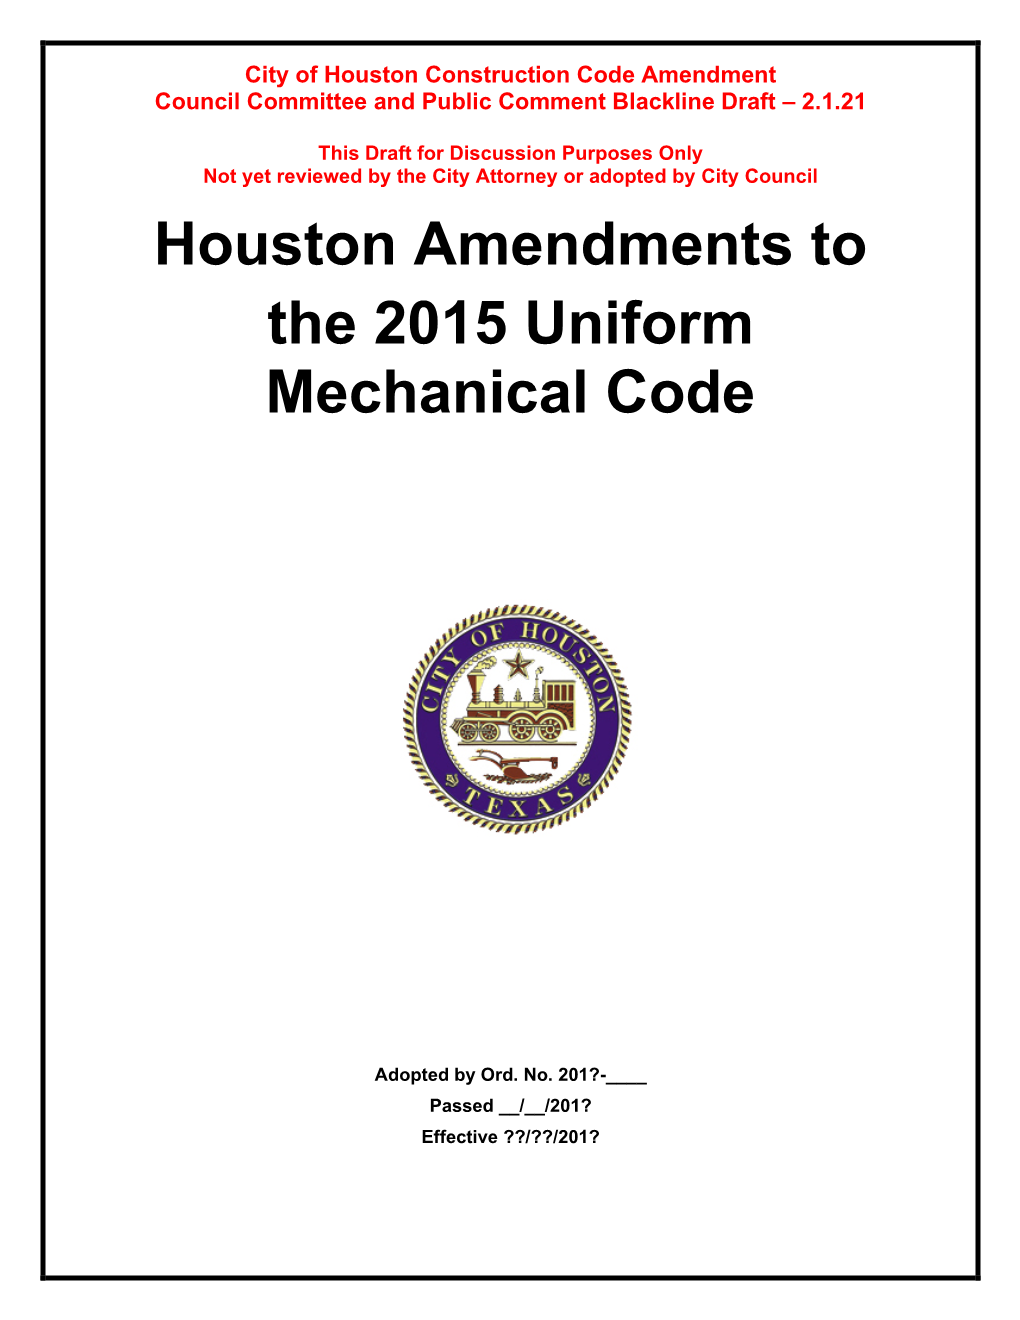 Houston Amendments to the 2015 Uniform Mechanical Code